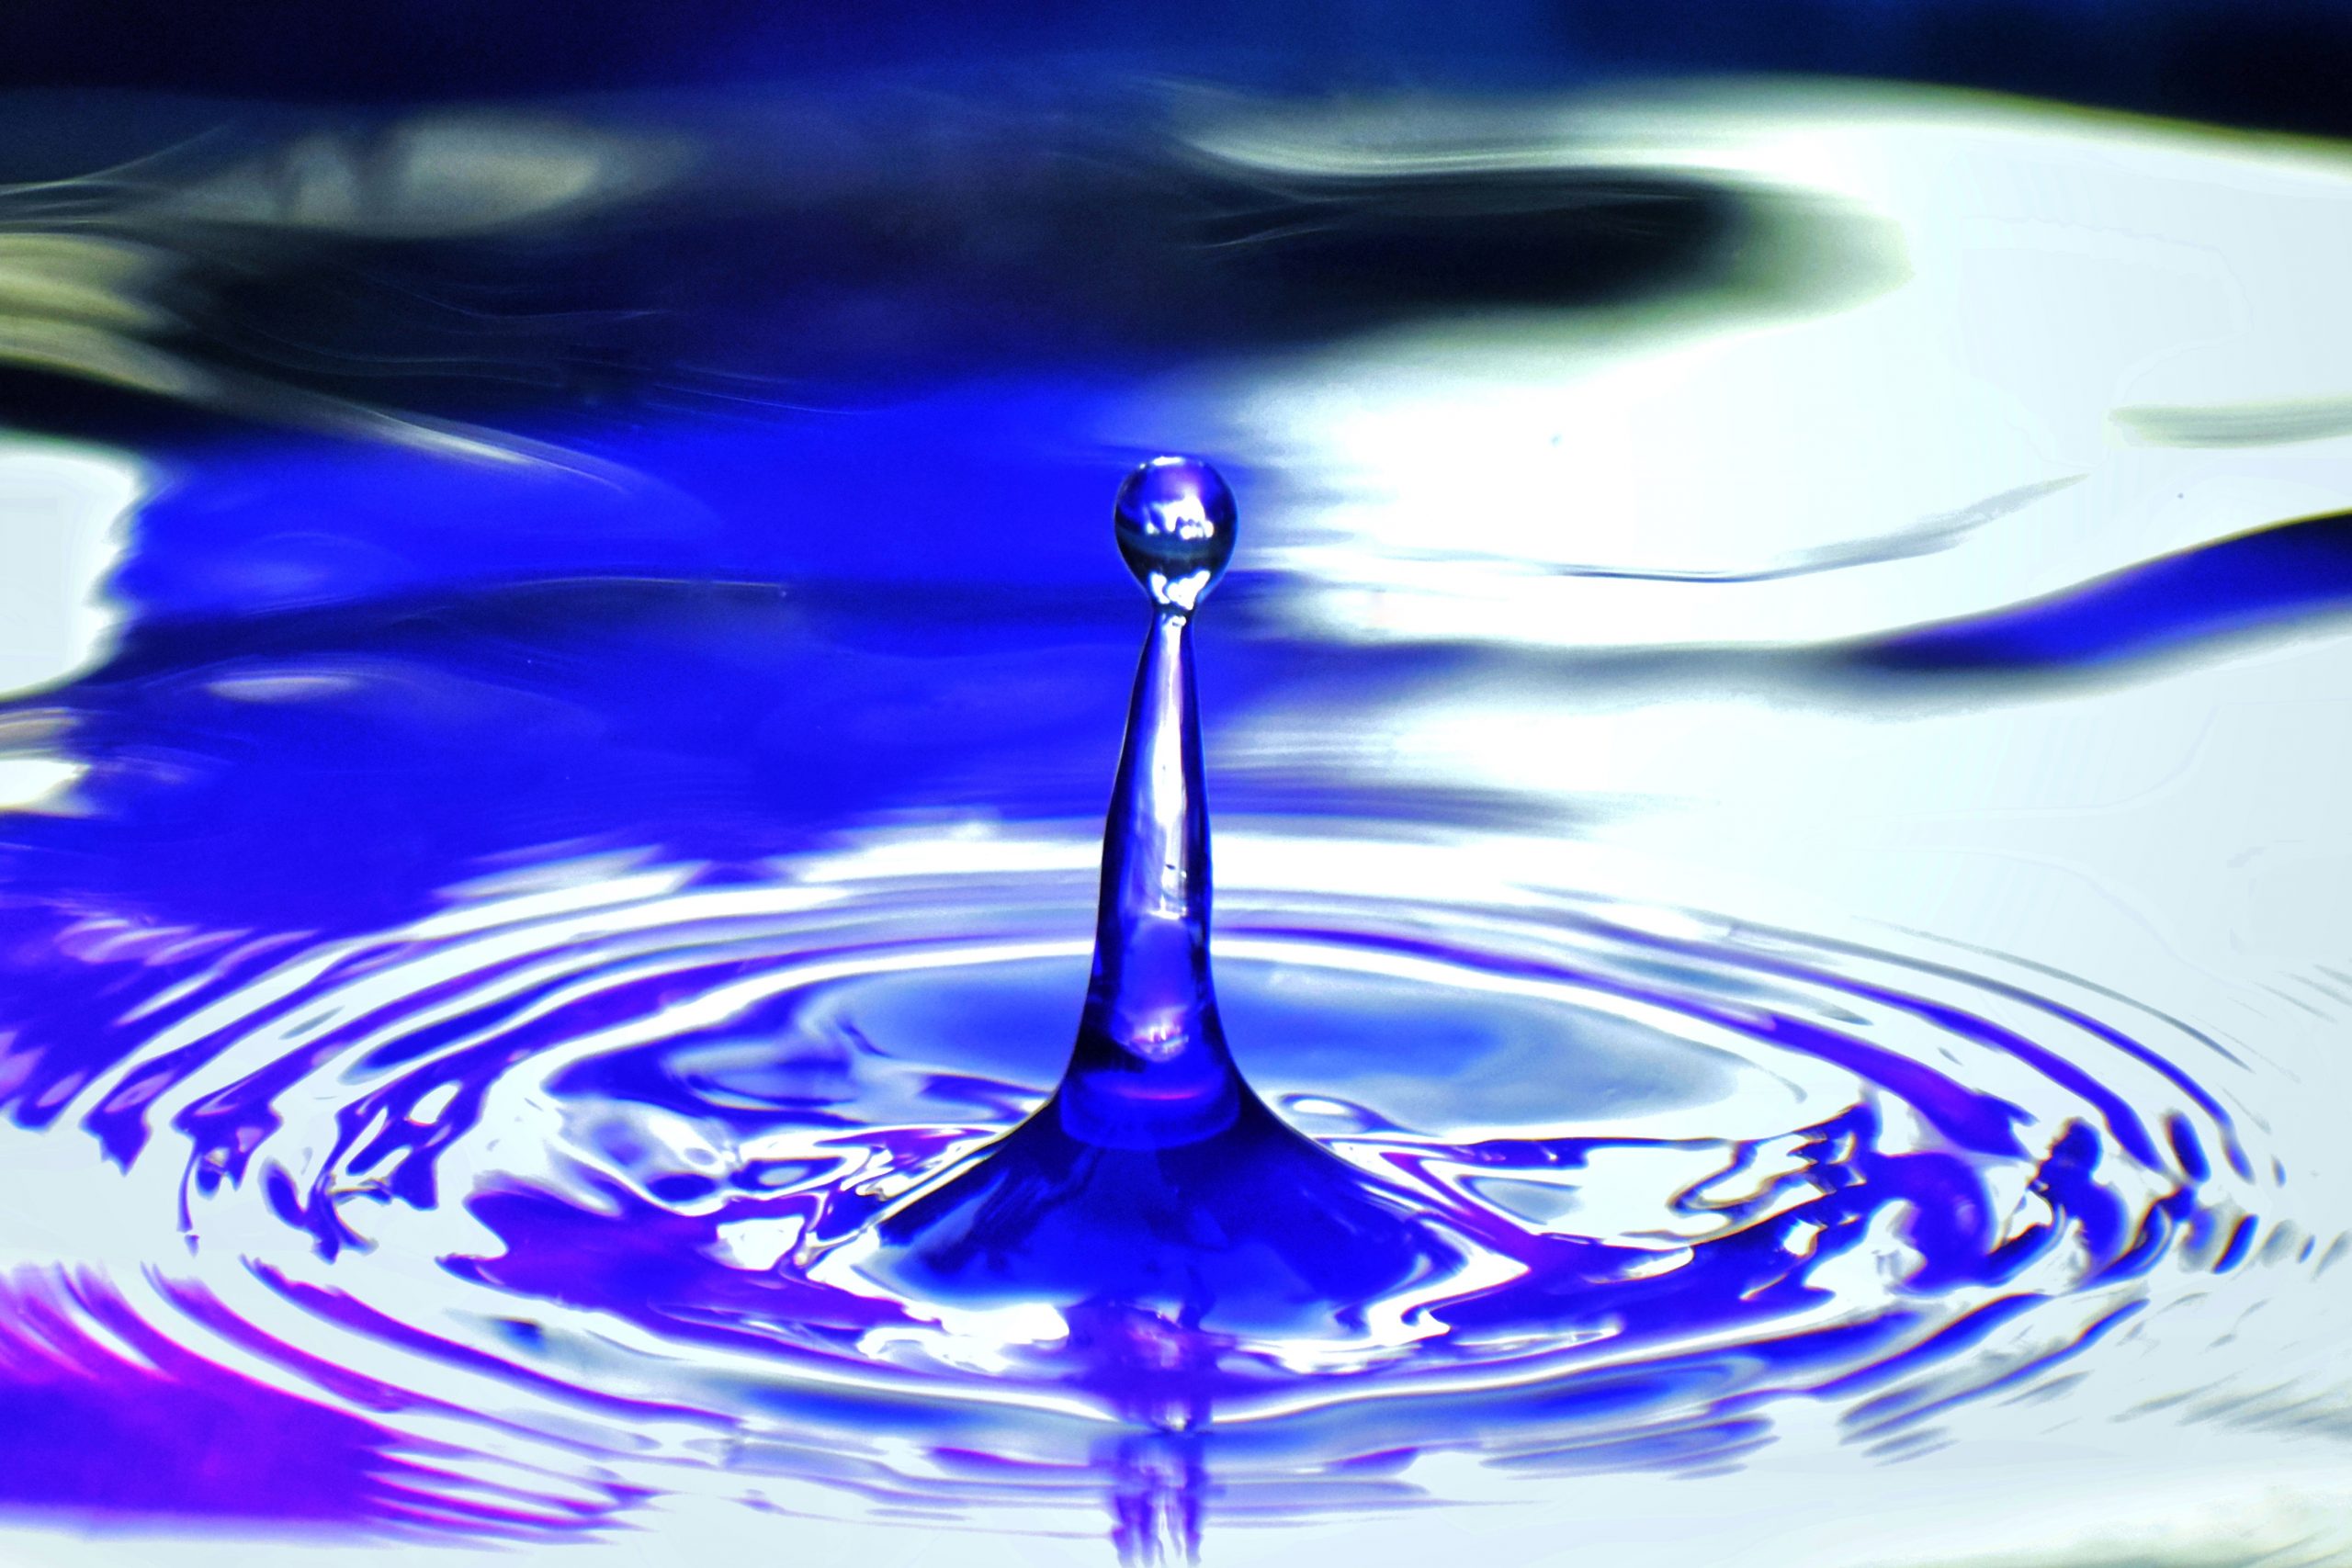 ripple effect in water